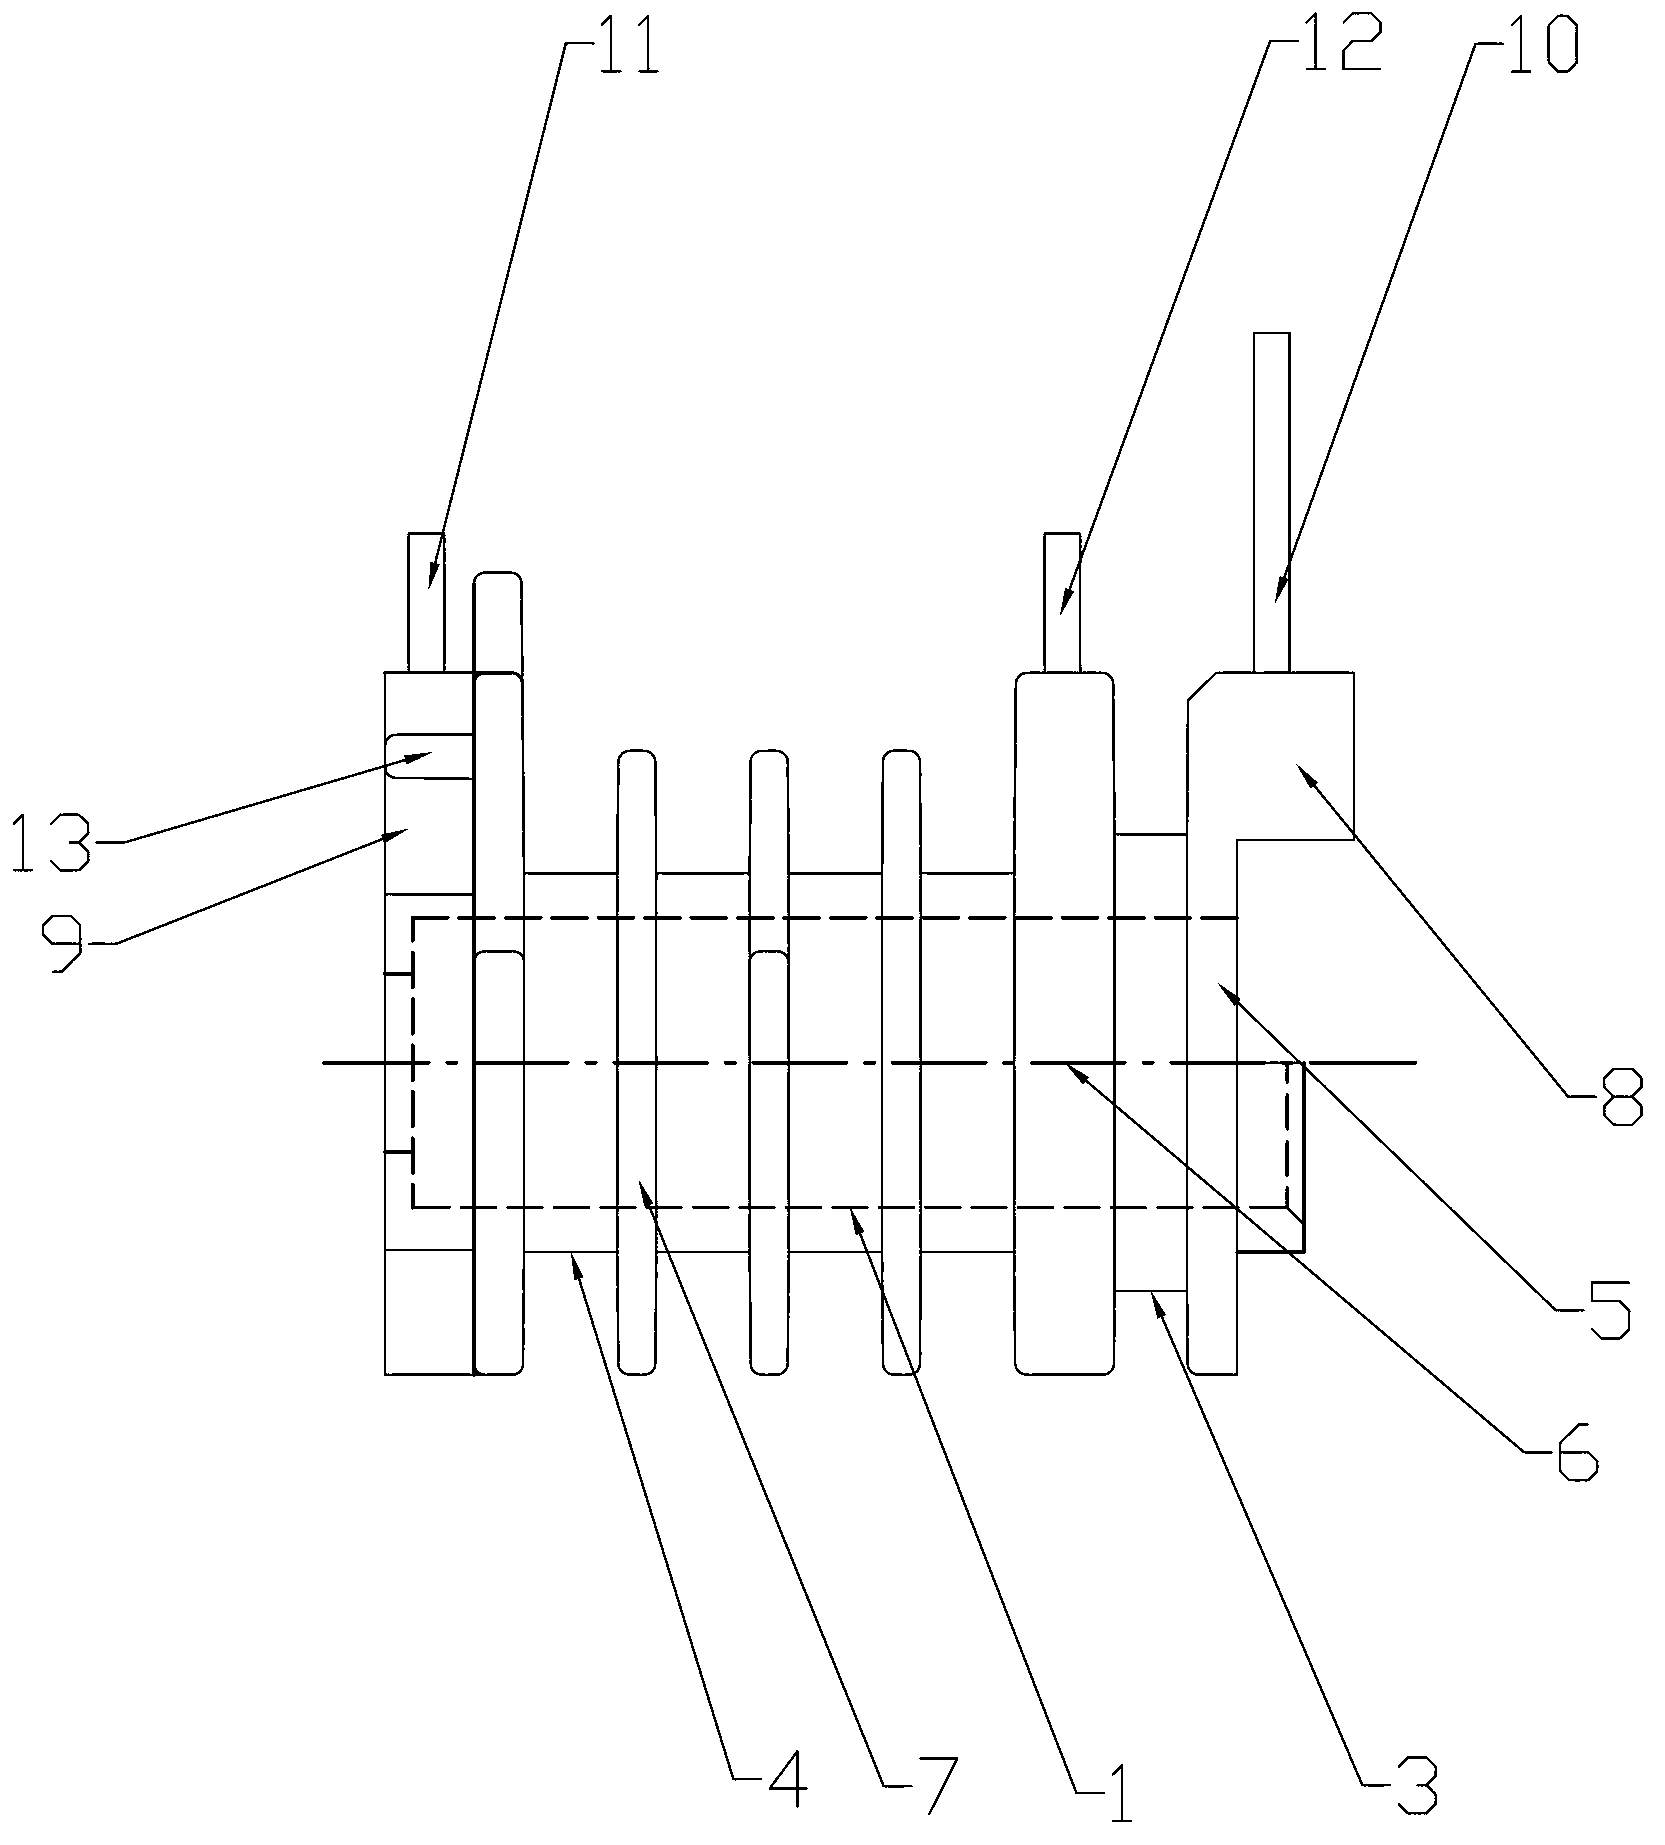 Framework of single-output ion generator